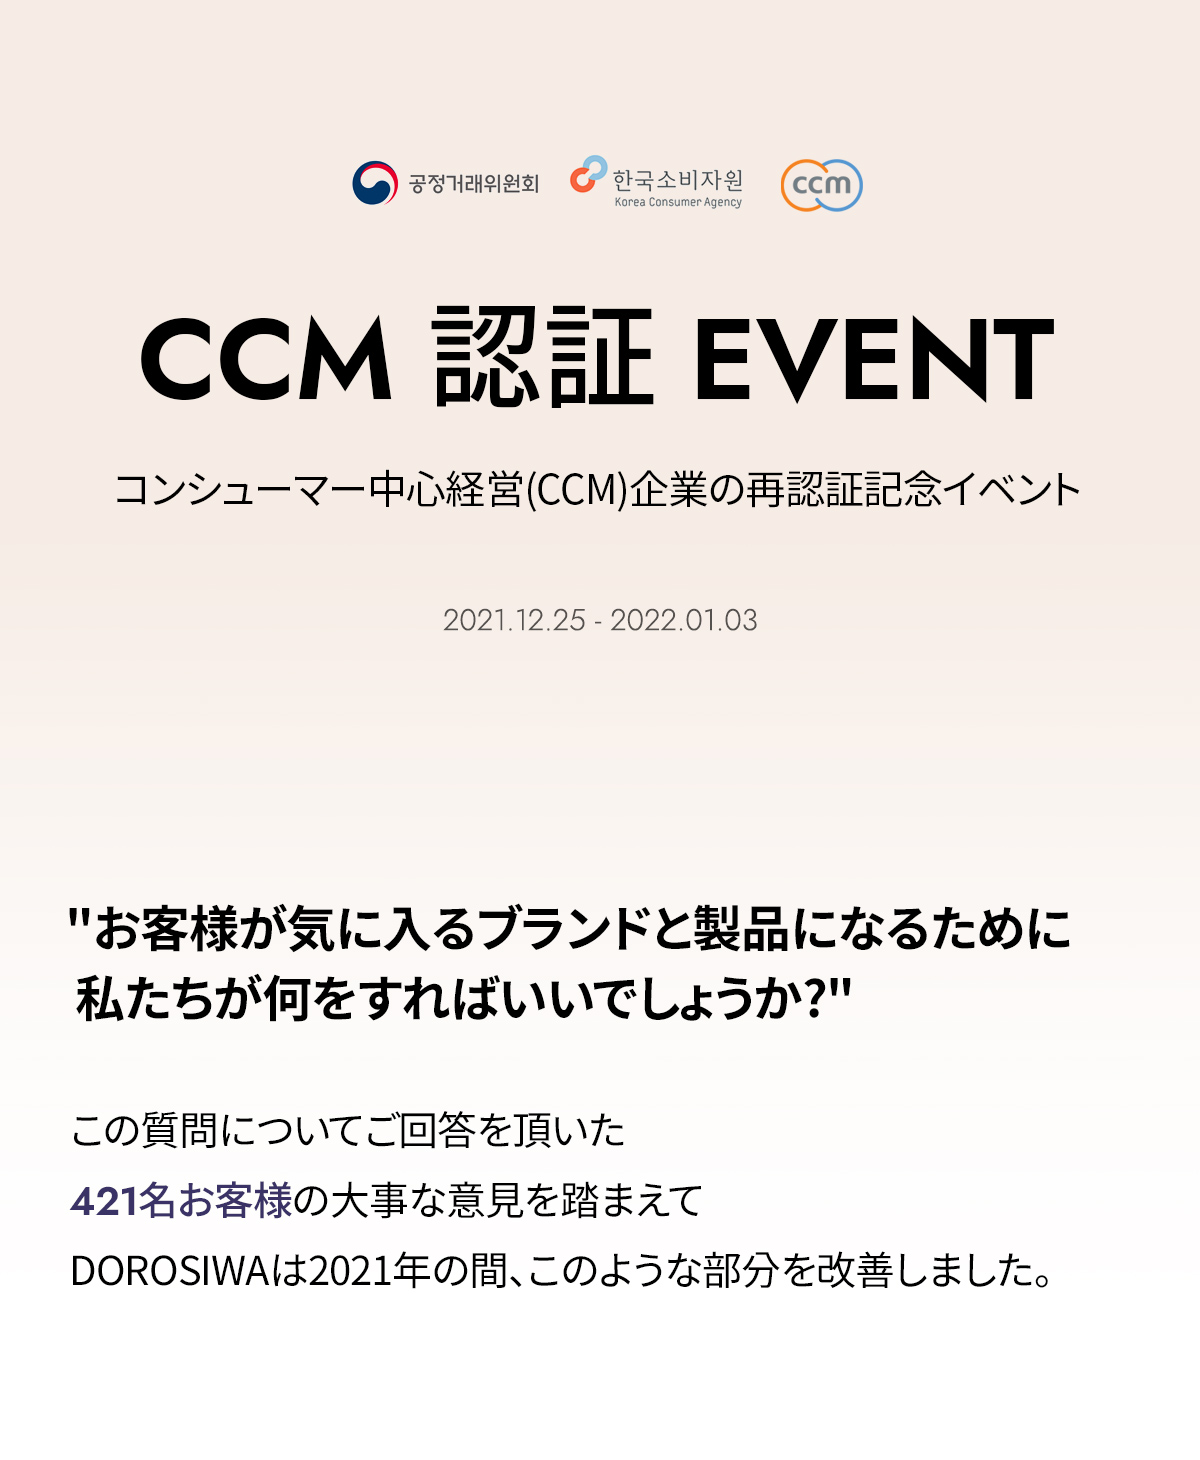 CCM 認証 EVENT